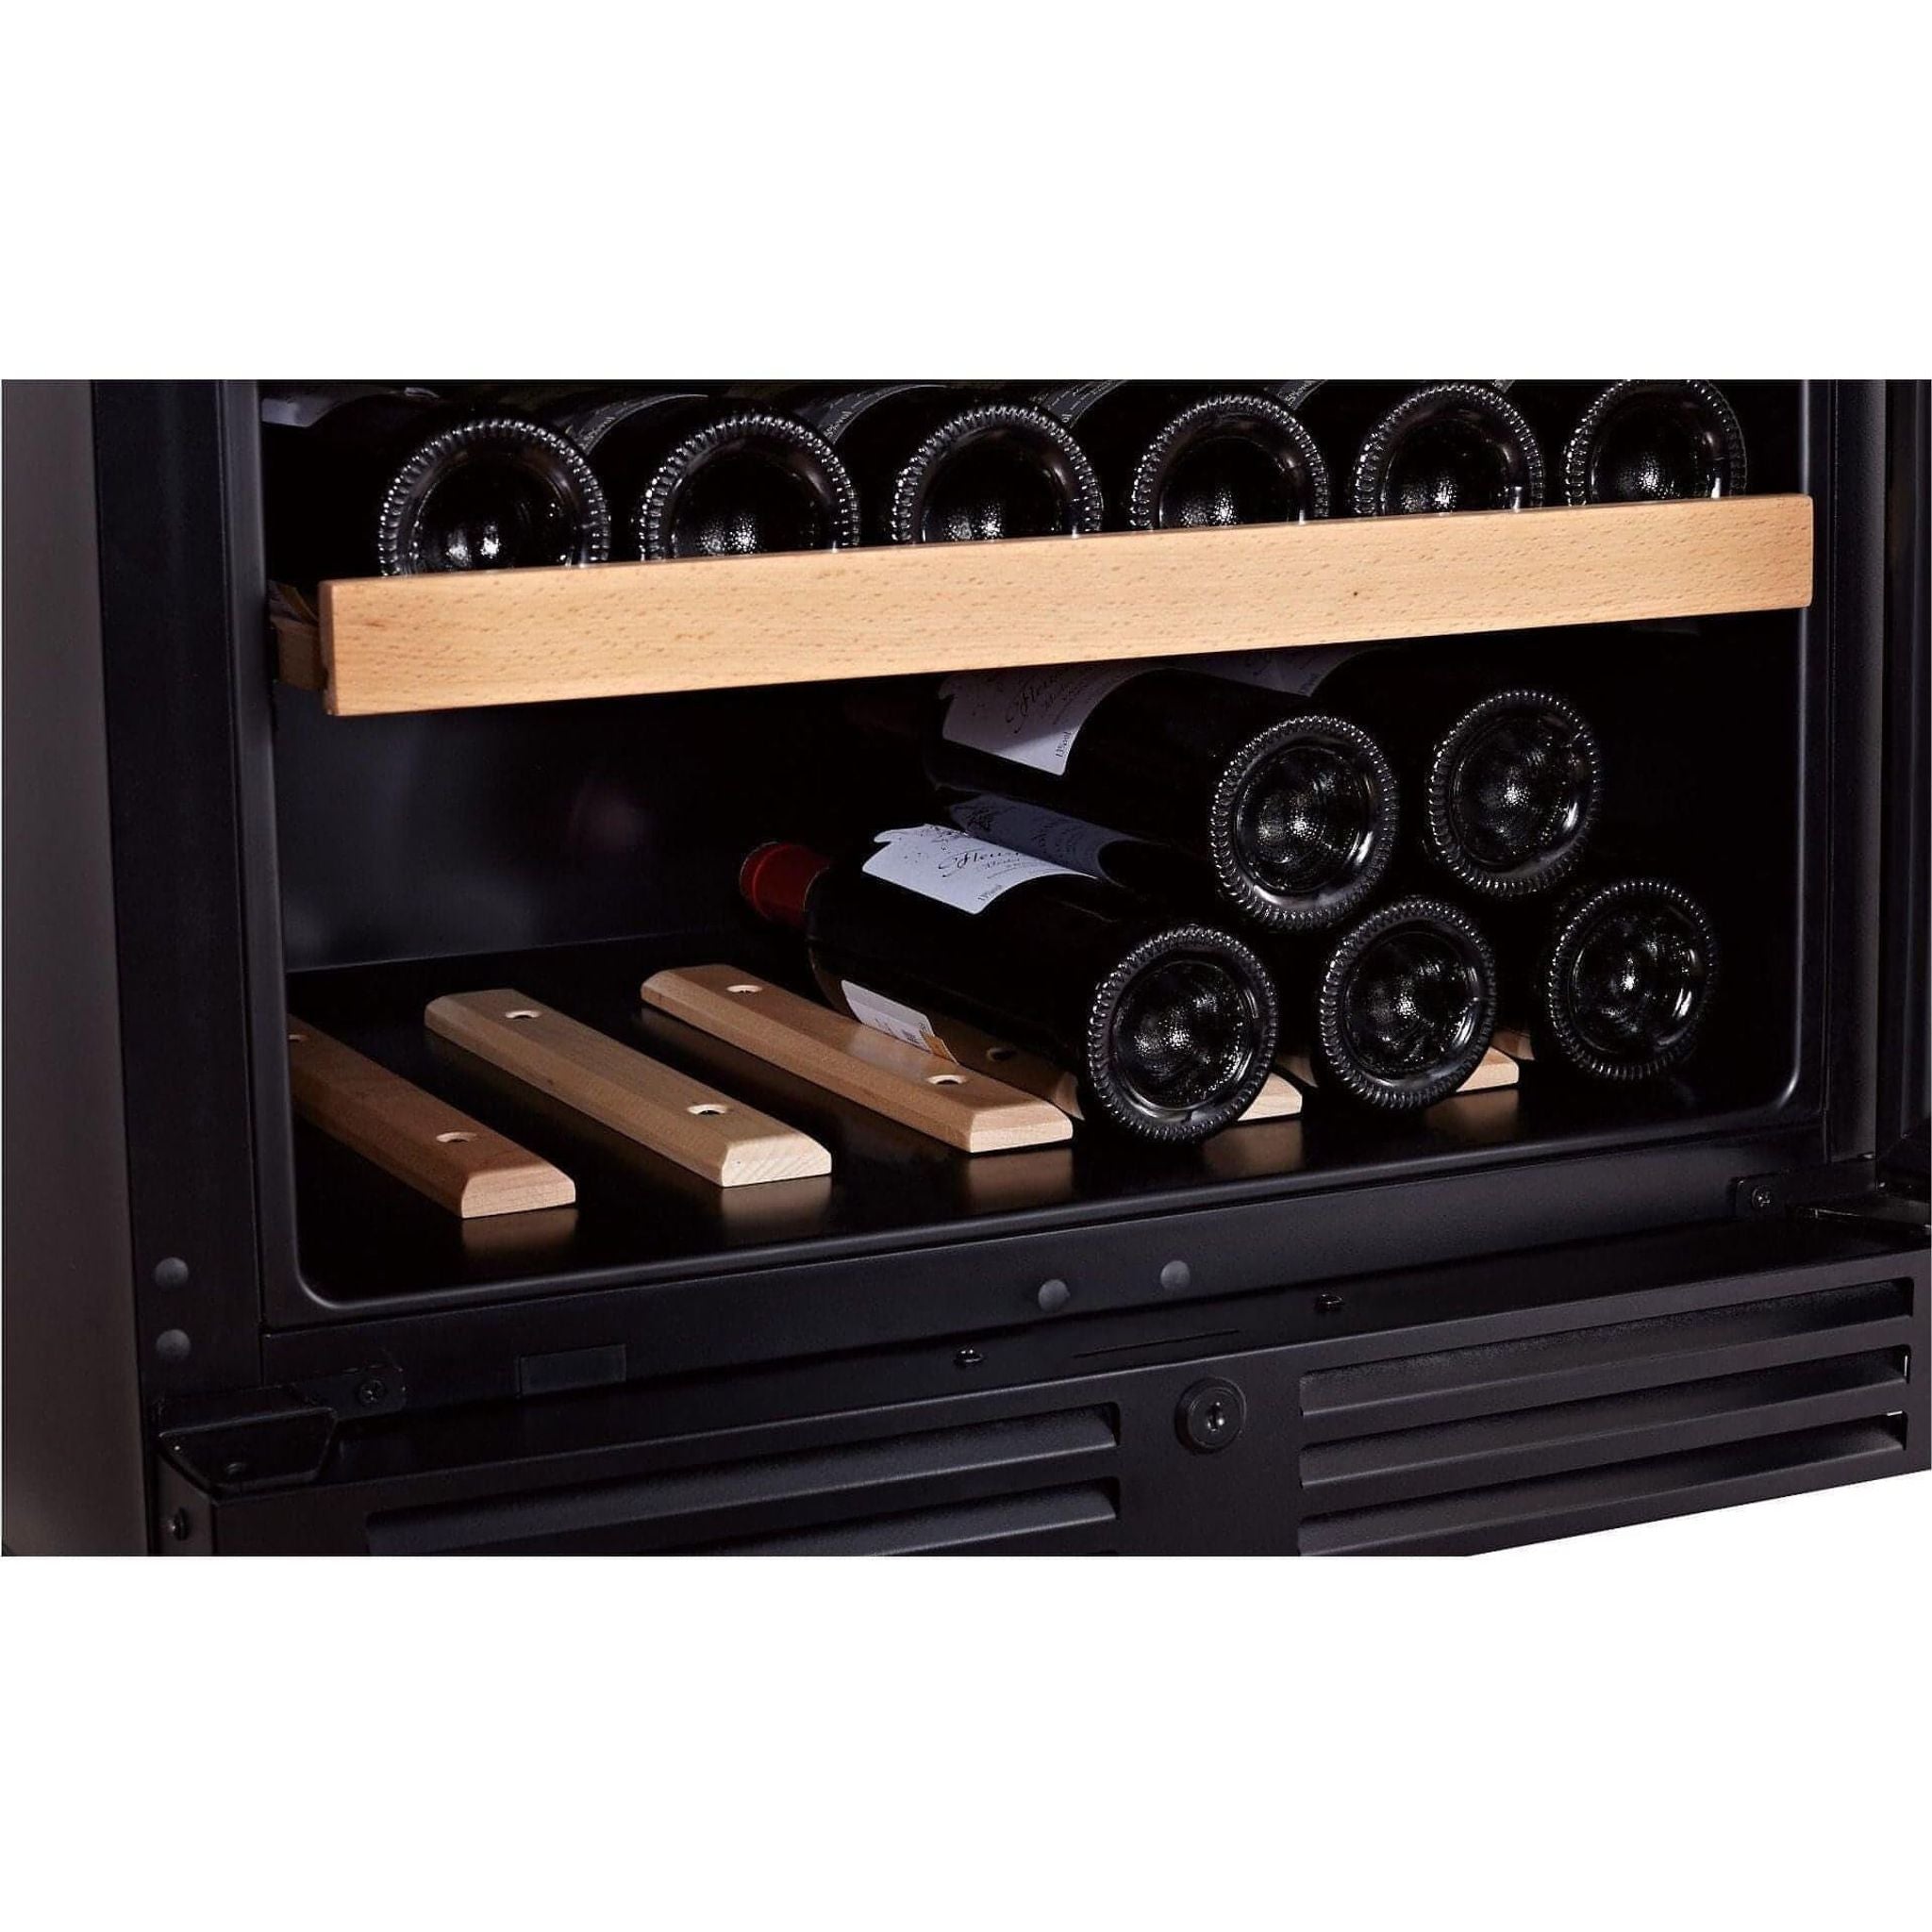 SWISSCAVE - Classic Edition 169 Bottle Single Zone Wine Cooler WL455F